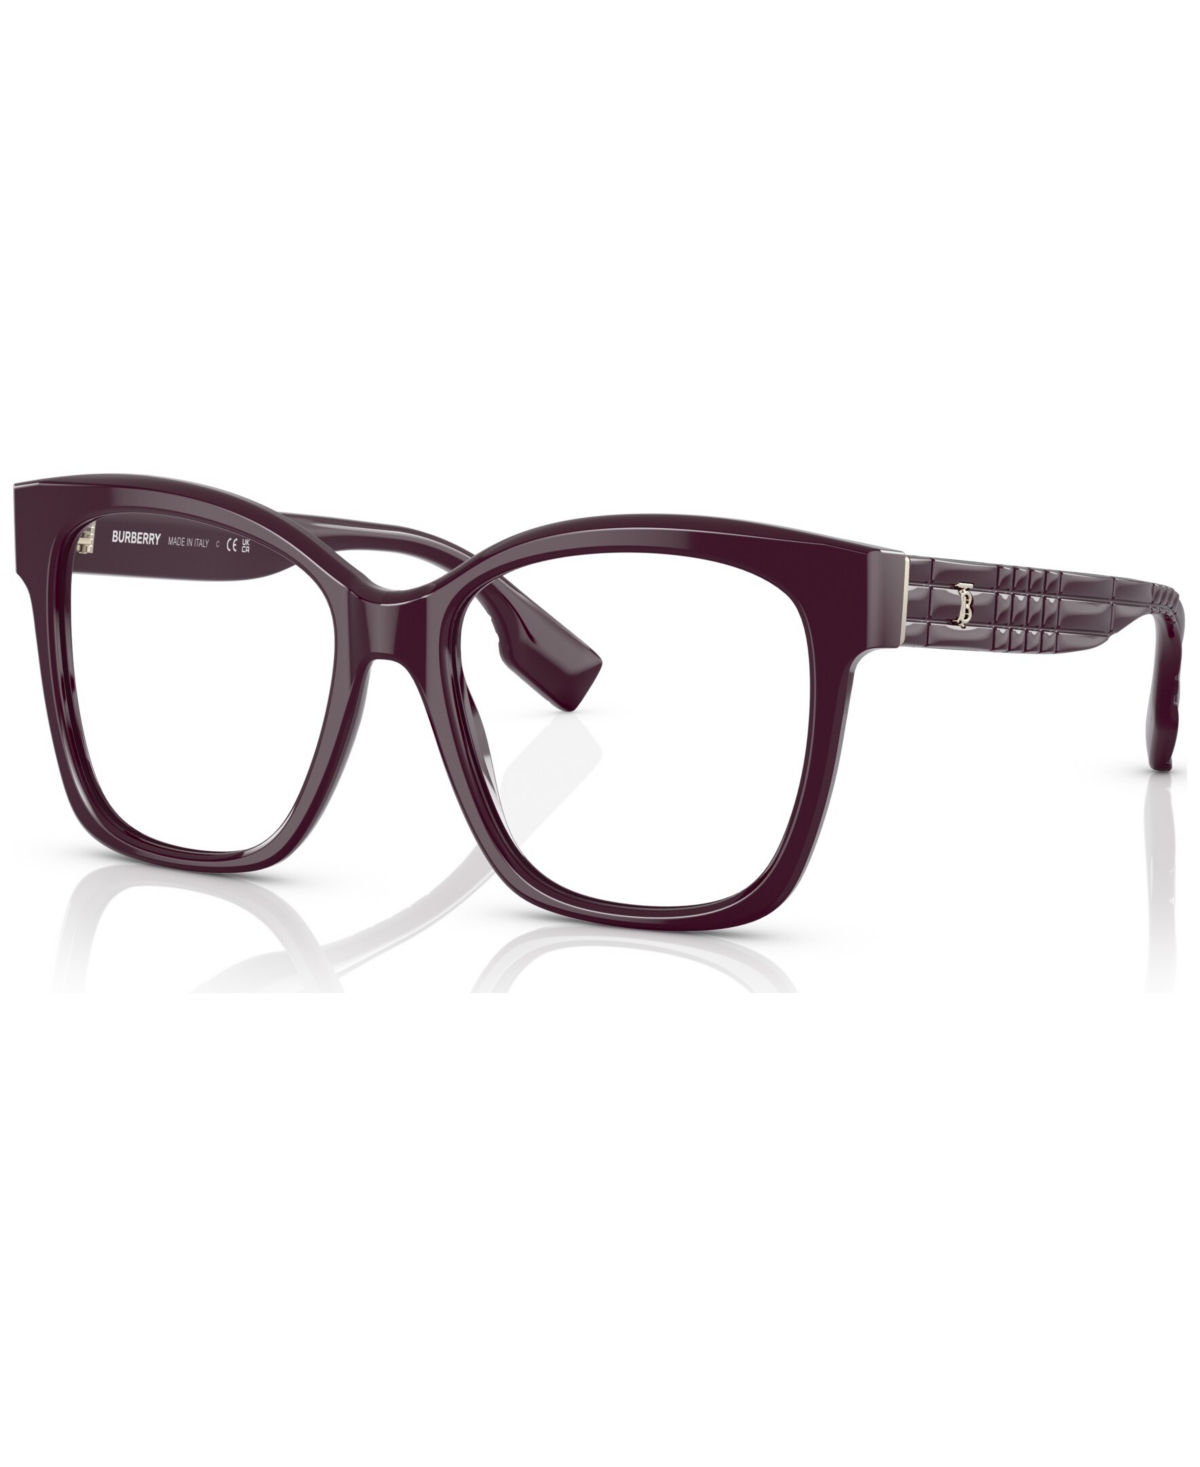 Women's Square Eyeglasses, BE236353-o - Bordeaux